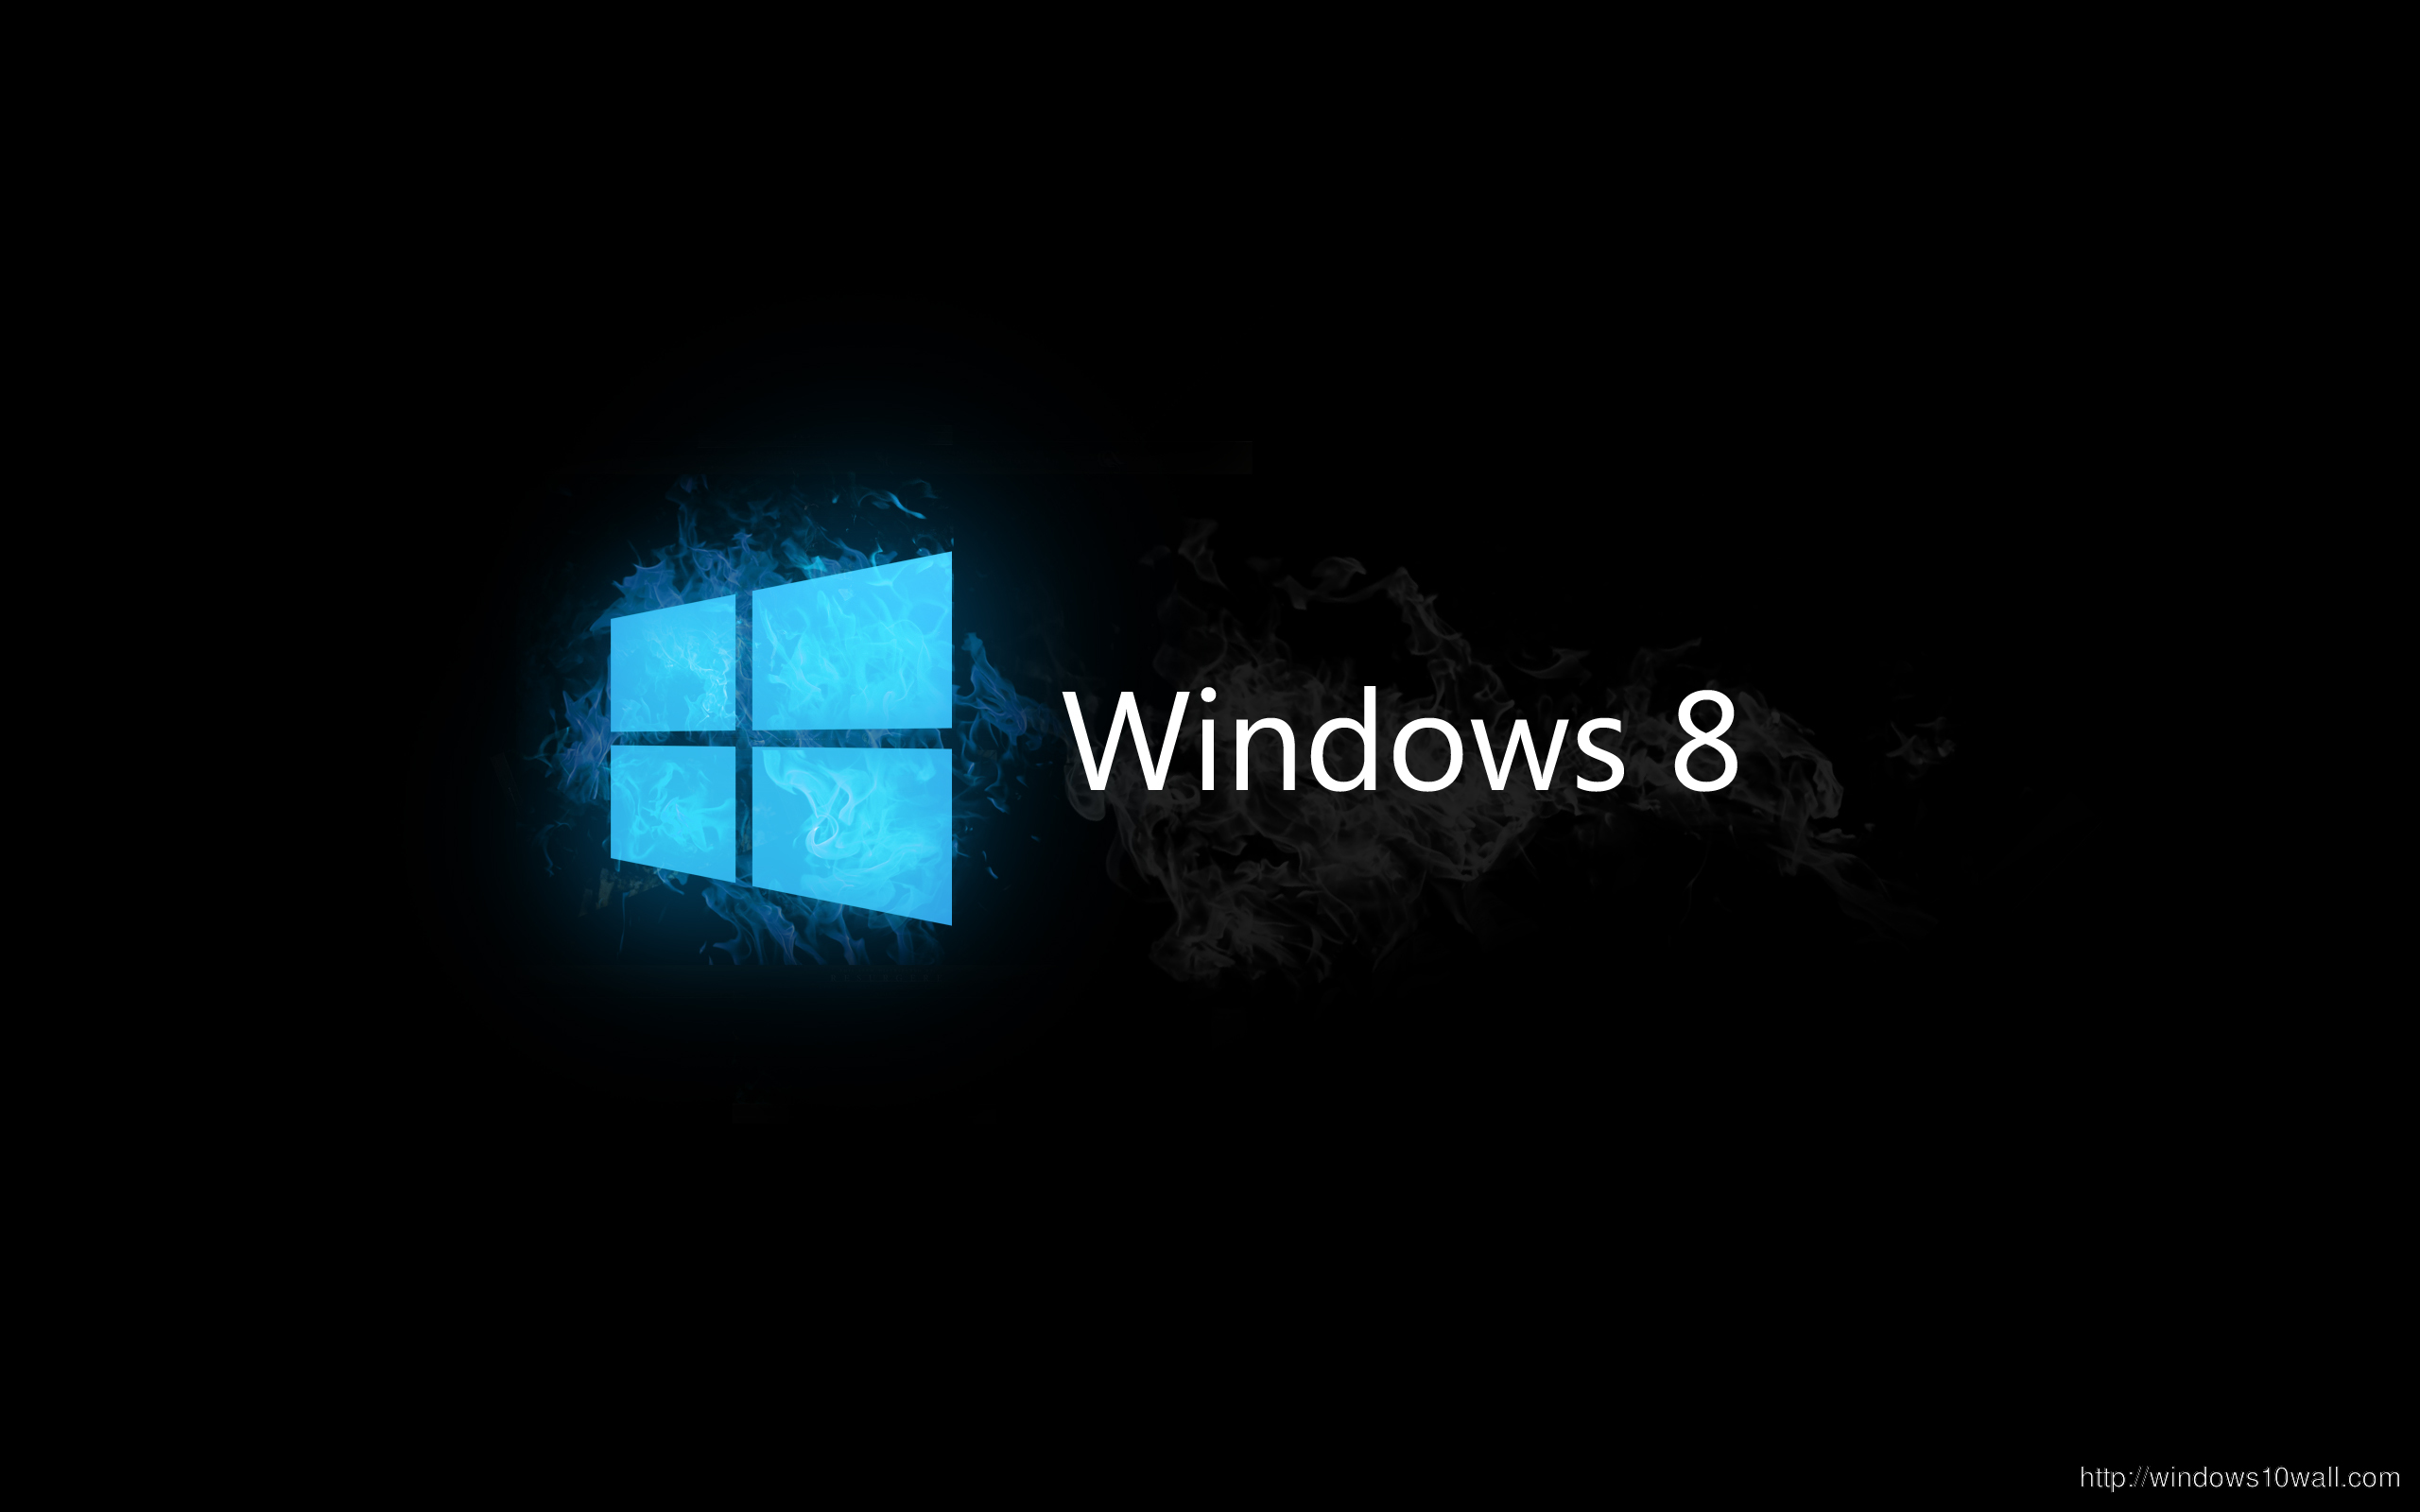 Desktop Windows 8 wallpaper for pc desktop